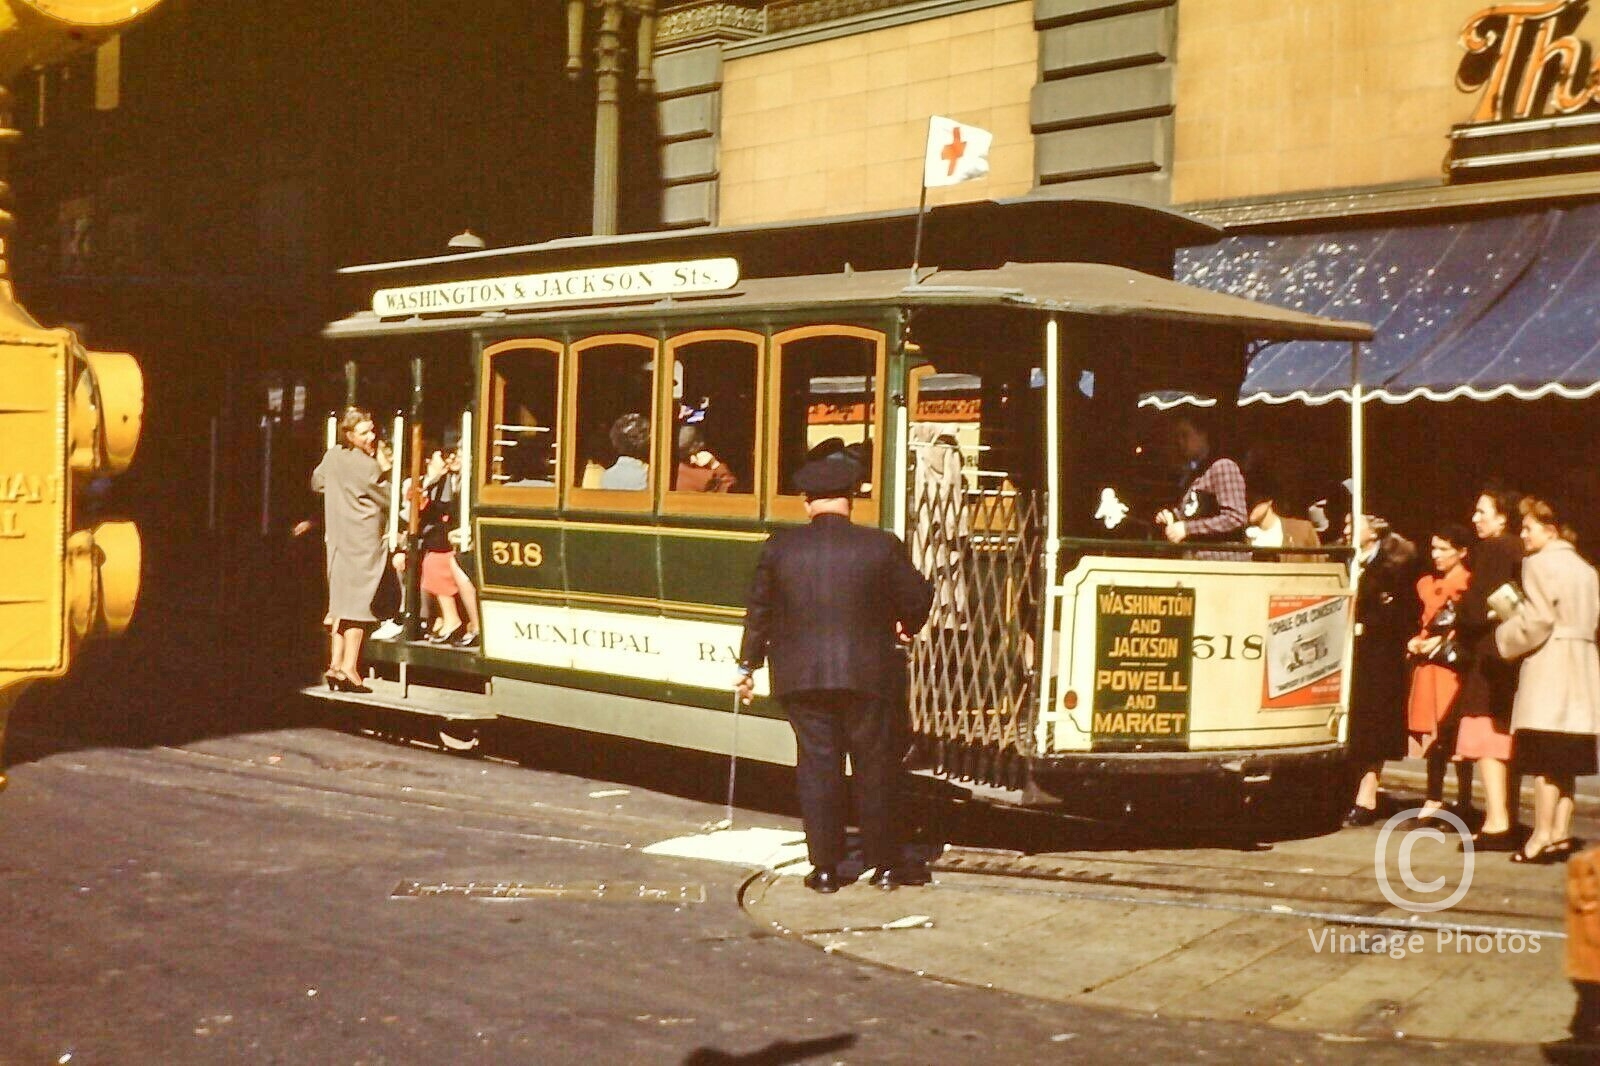 1940s San Francisco - Washington & Jackson Powell & Market Tram